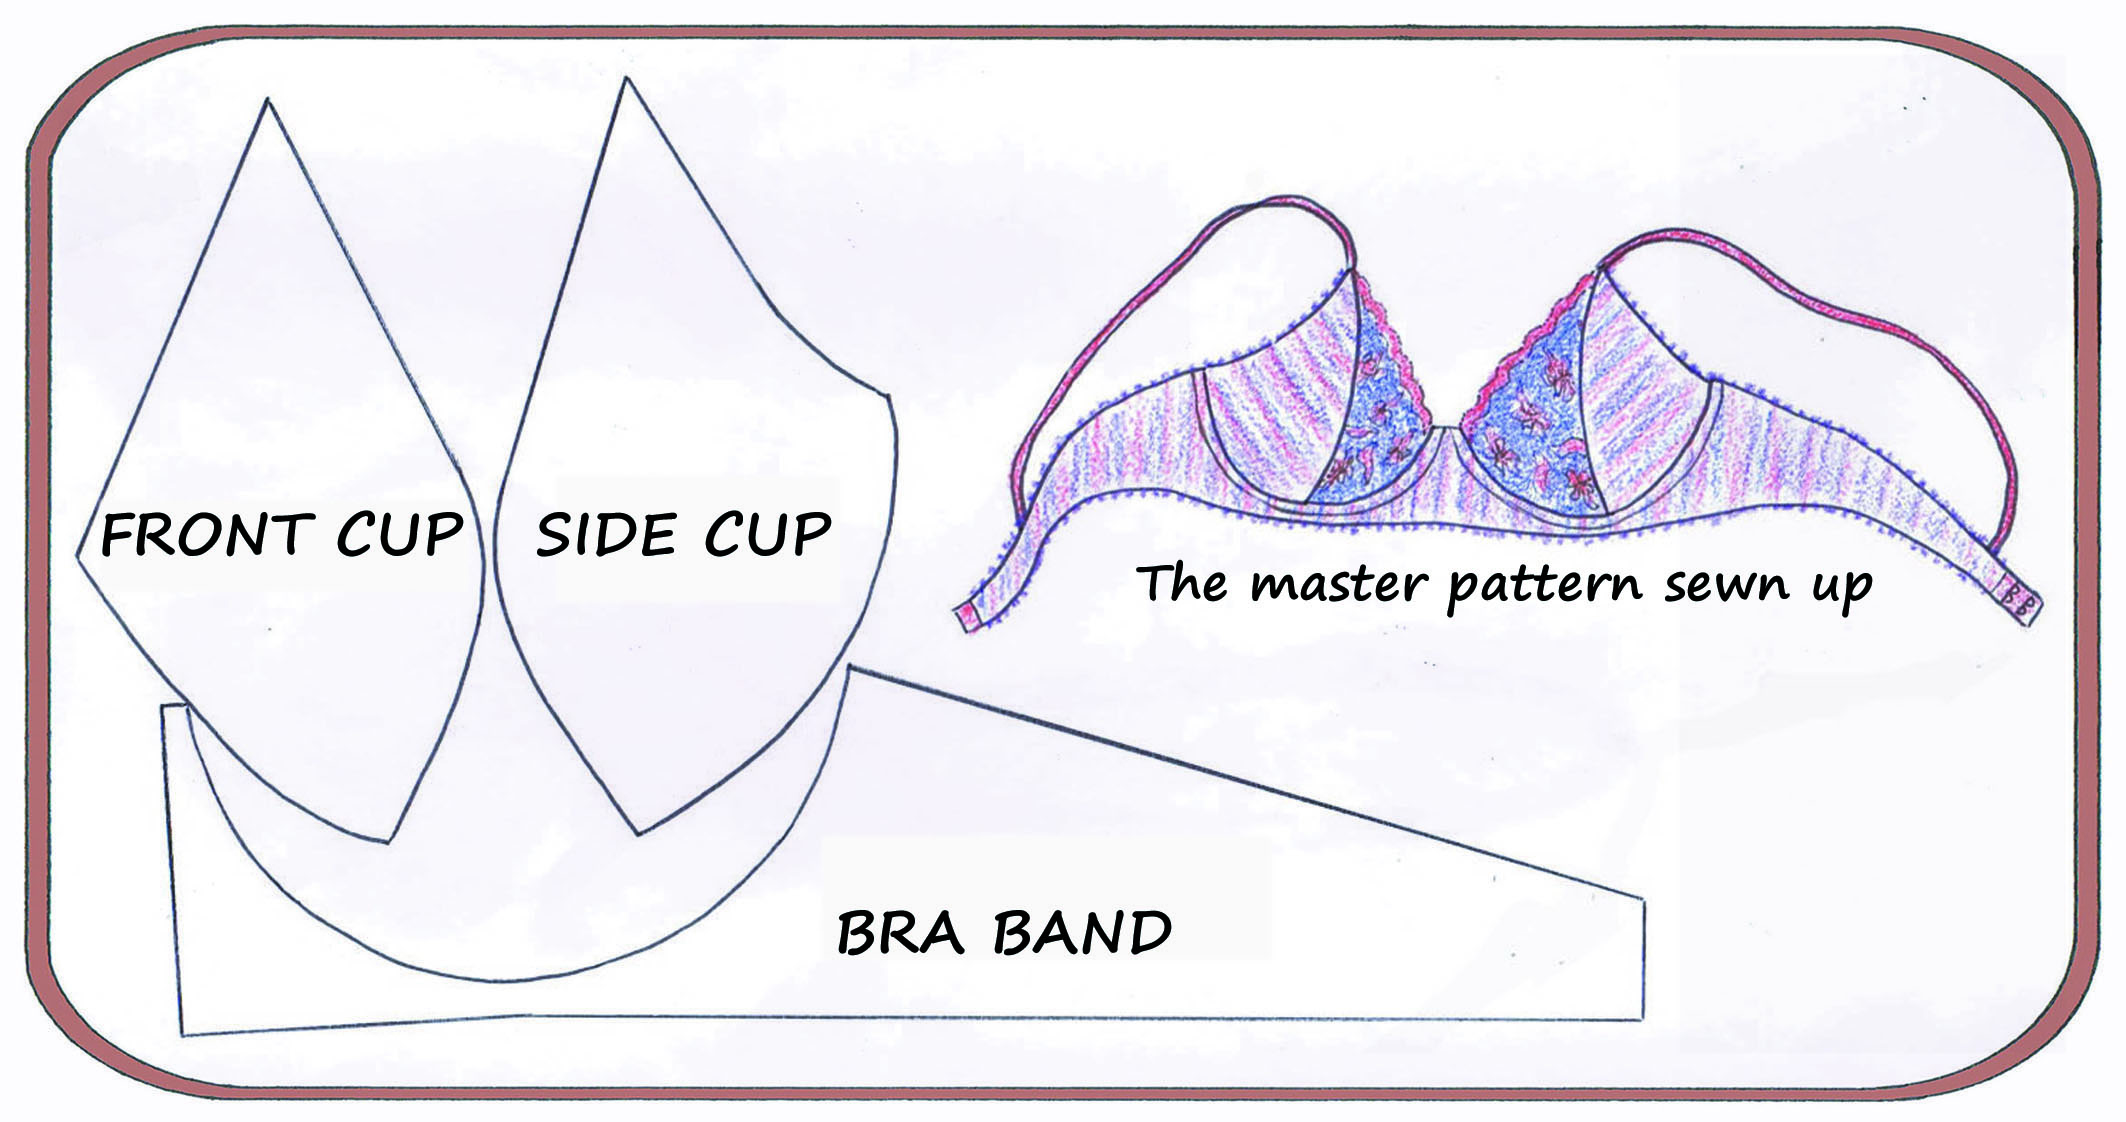 New Merckwaerdigh e-course in the making for bra pattern drawing